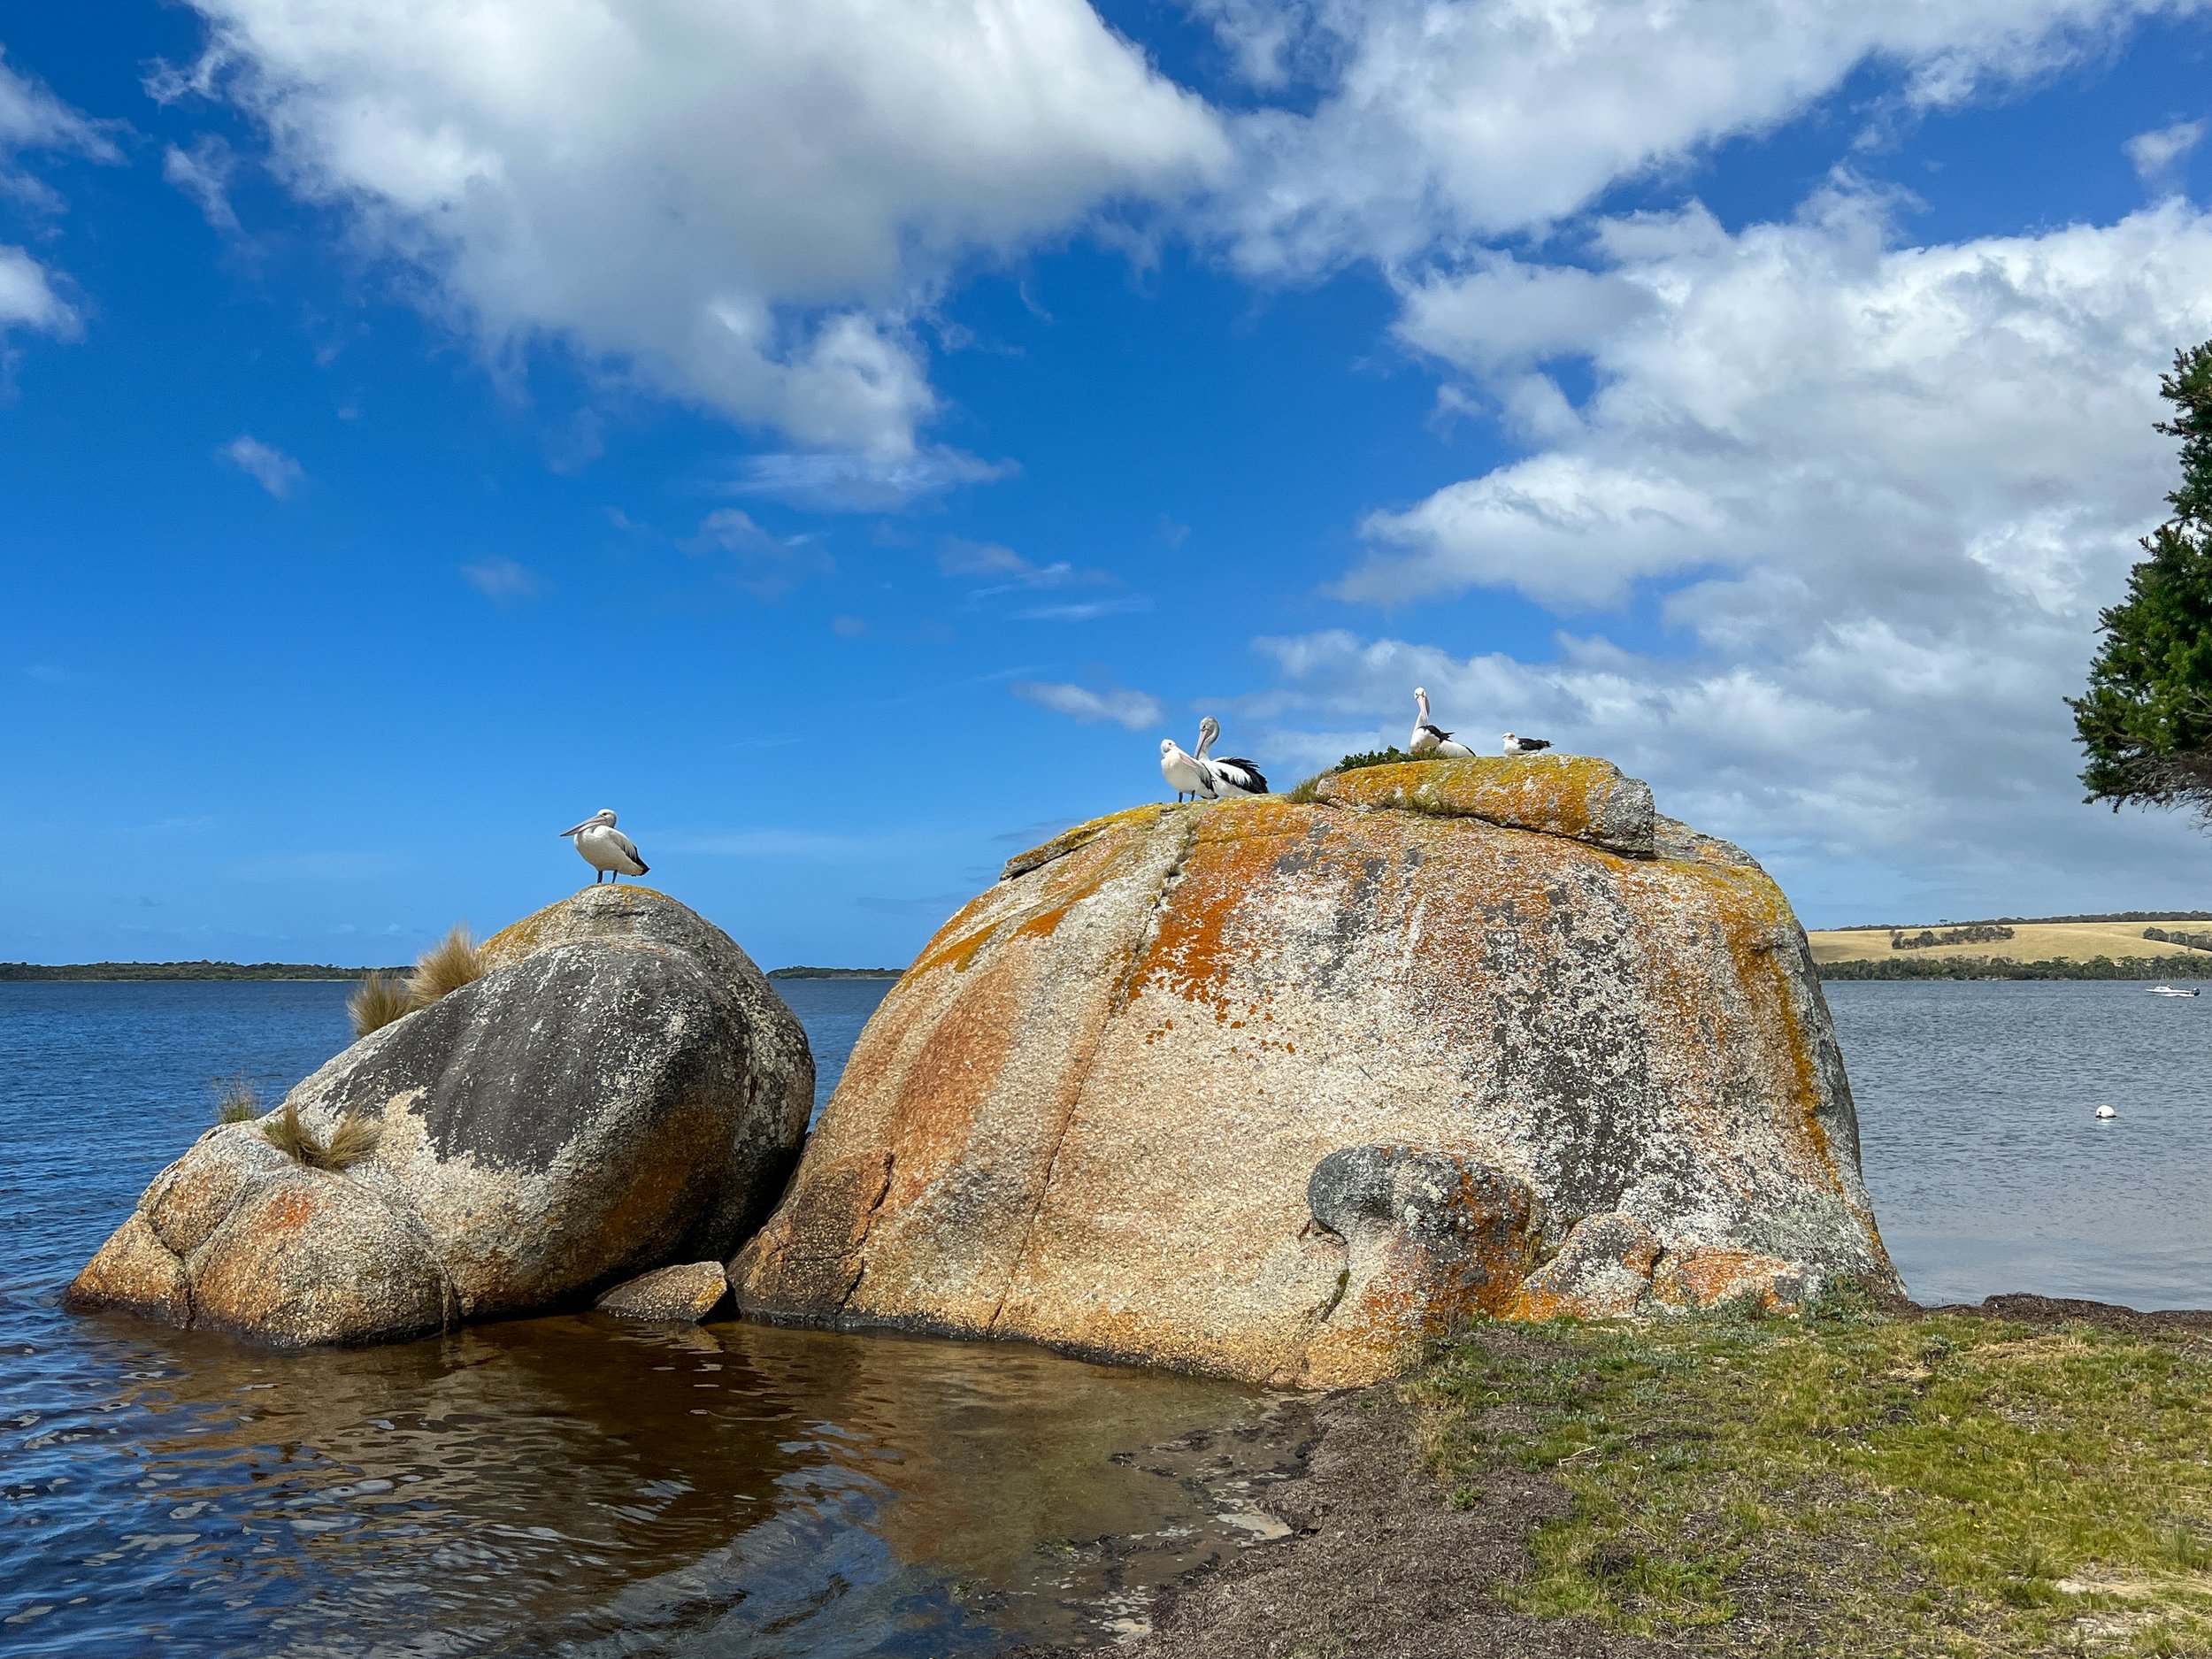 Pelicans on the big rock